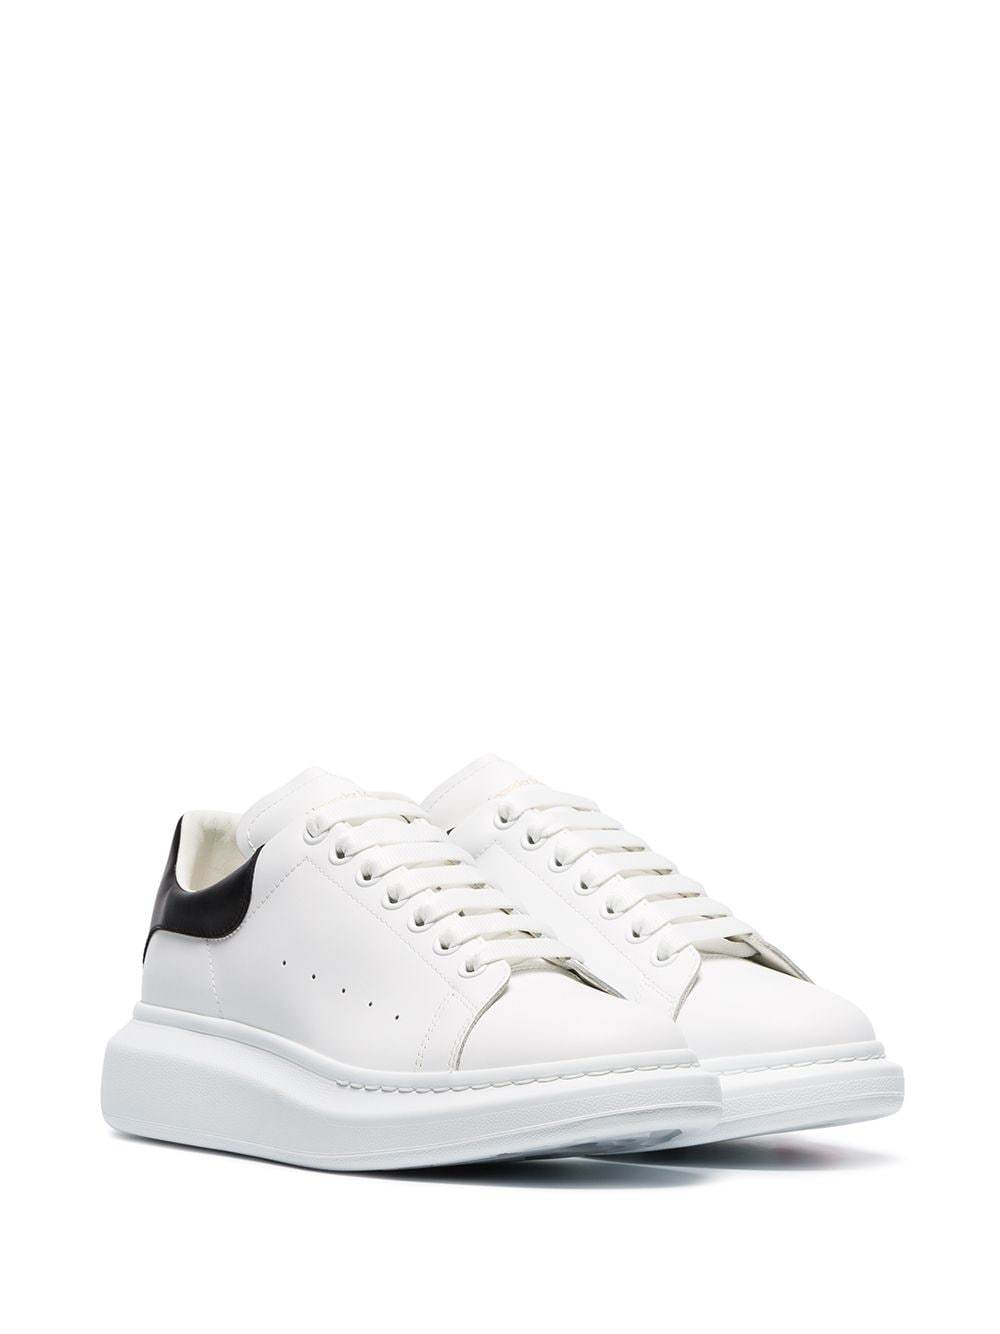 ALEXANDER MCQUEEN oversized sole sneakers white/black - Maison De Fashion 